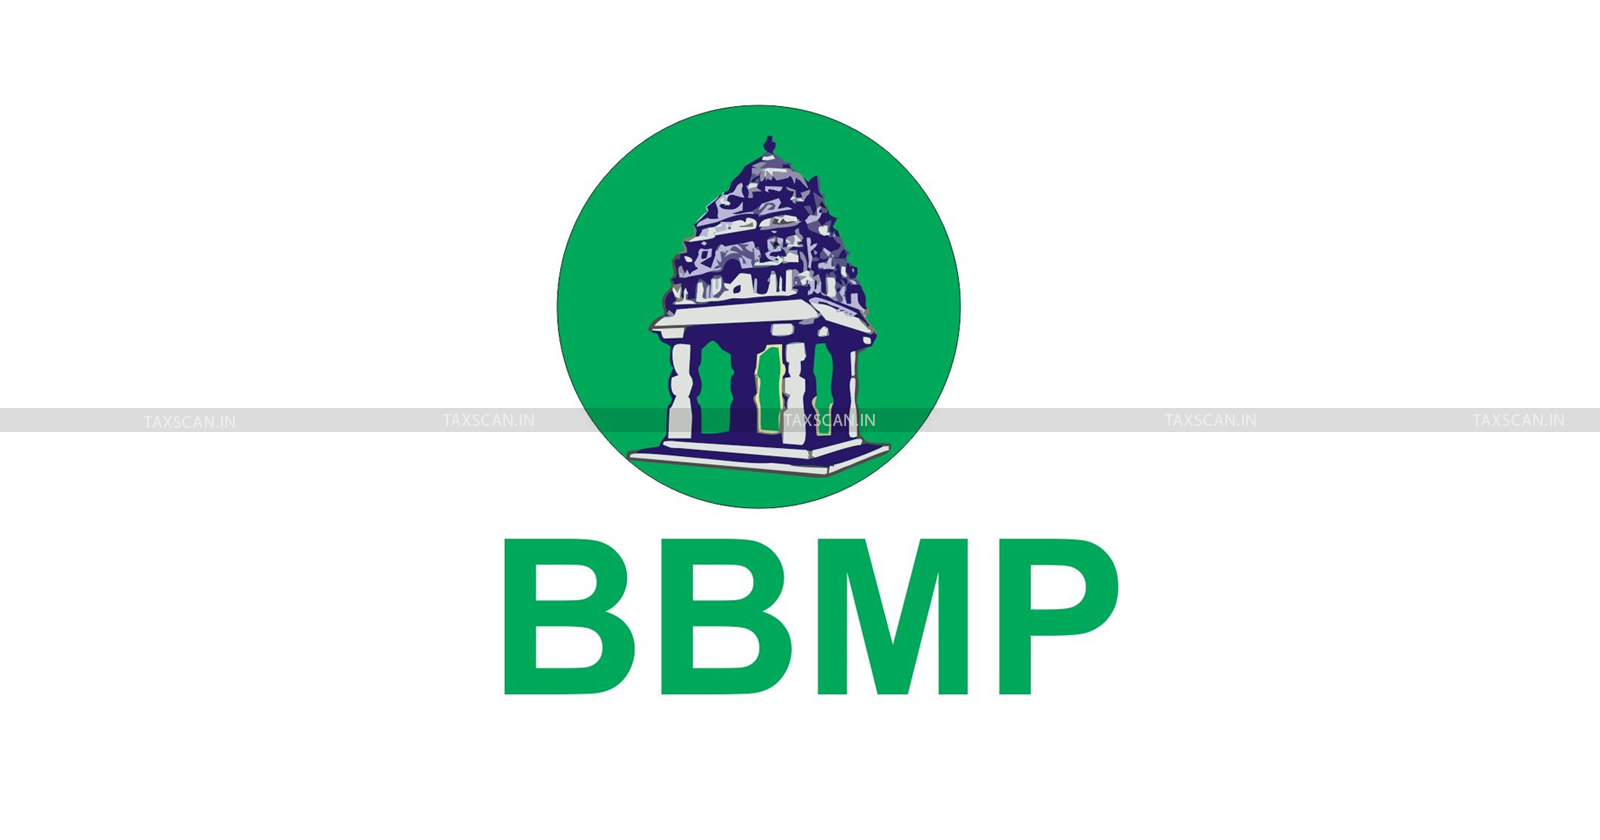 Property Tax BBMP - BBMP - seals Mantri Square Mall - TAXSCAN